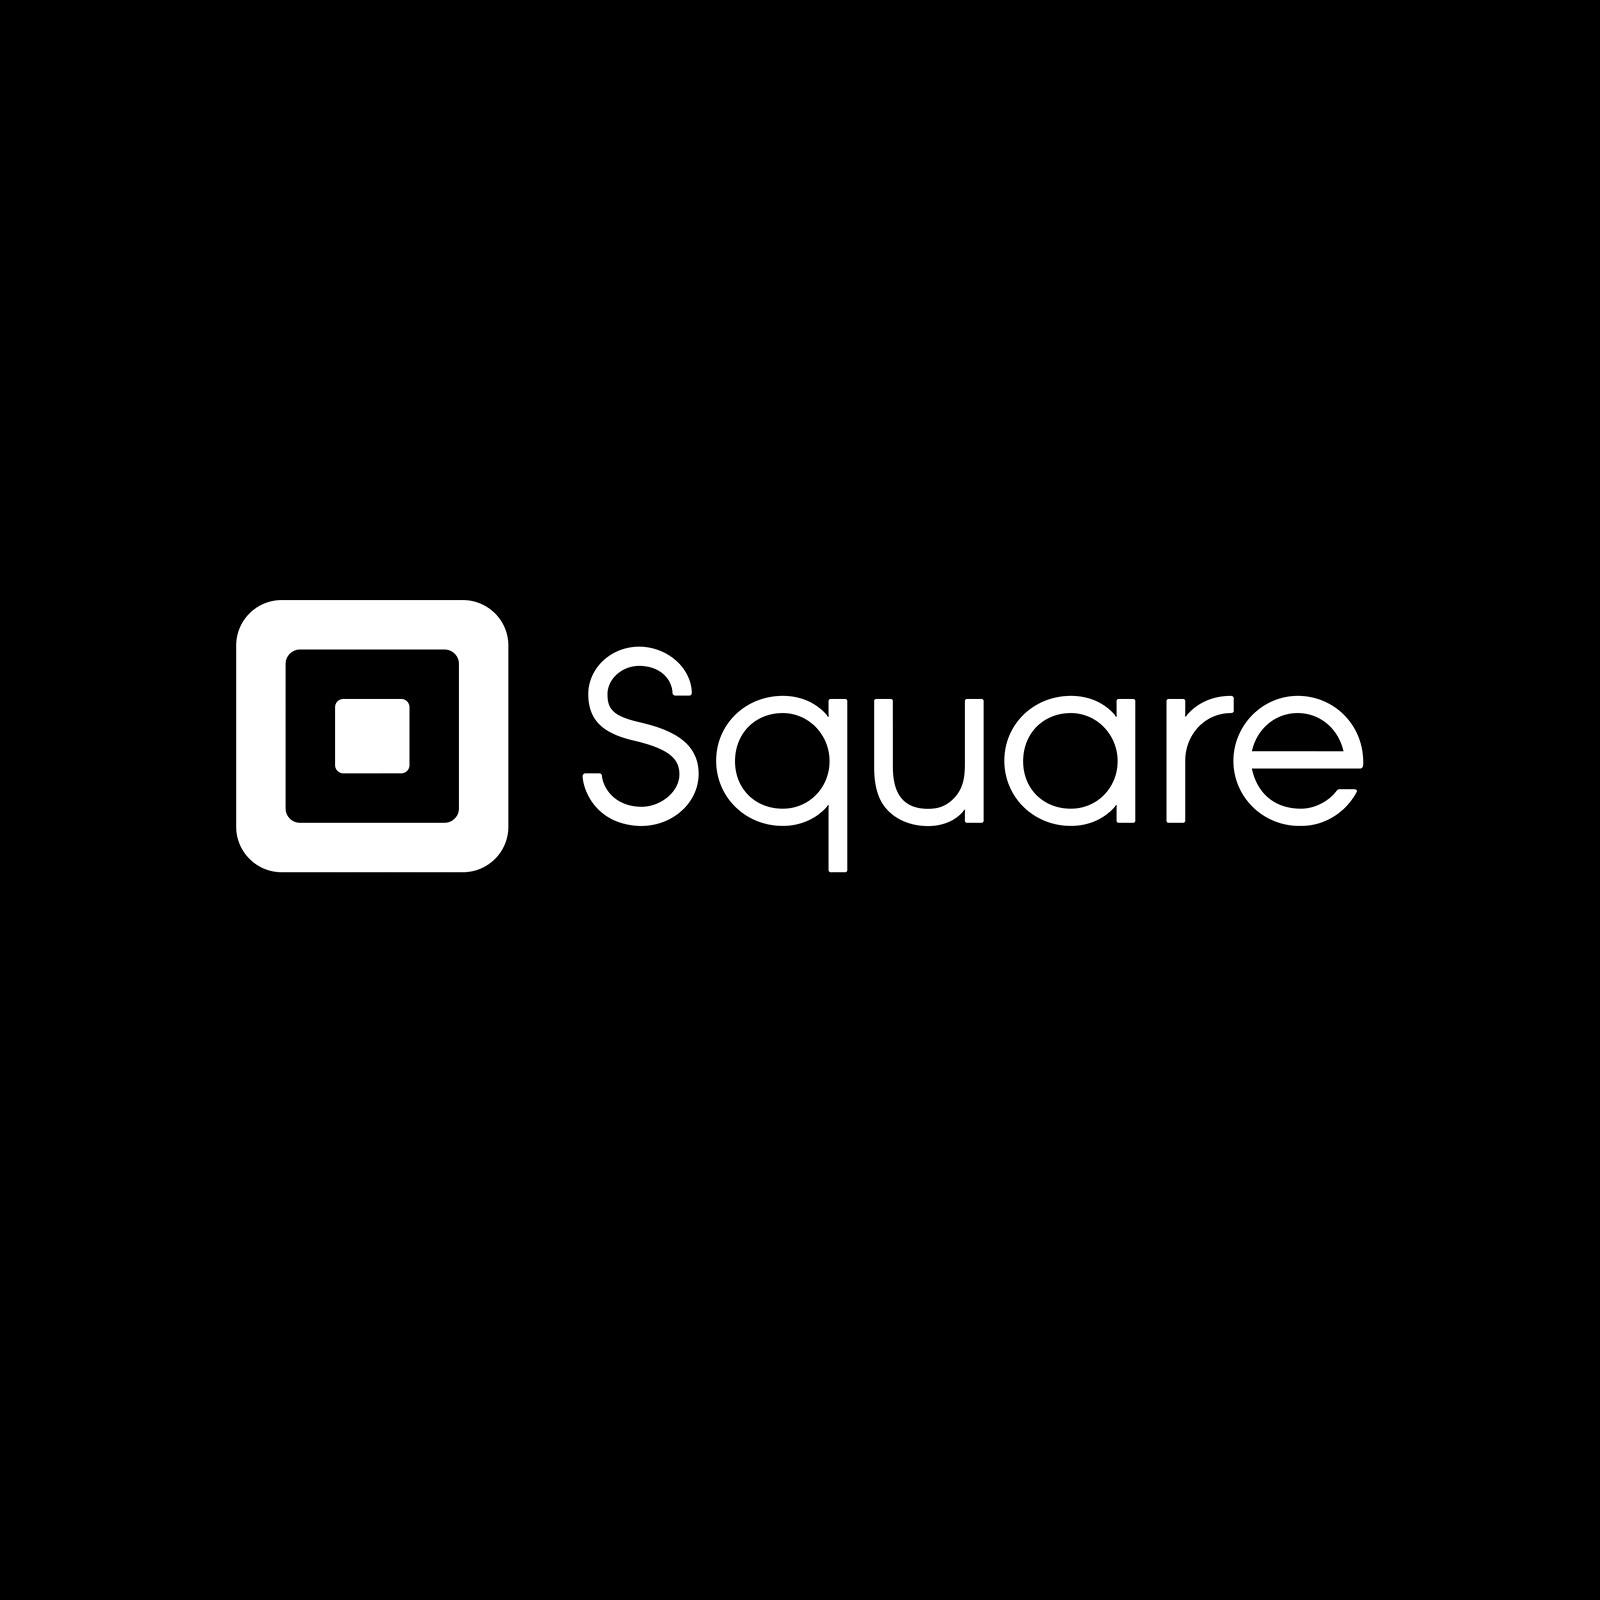 Open Square Logo - File:Square-logo-white.jpeg - Wikimedia Commons